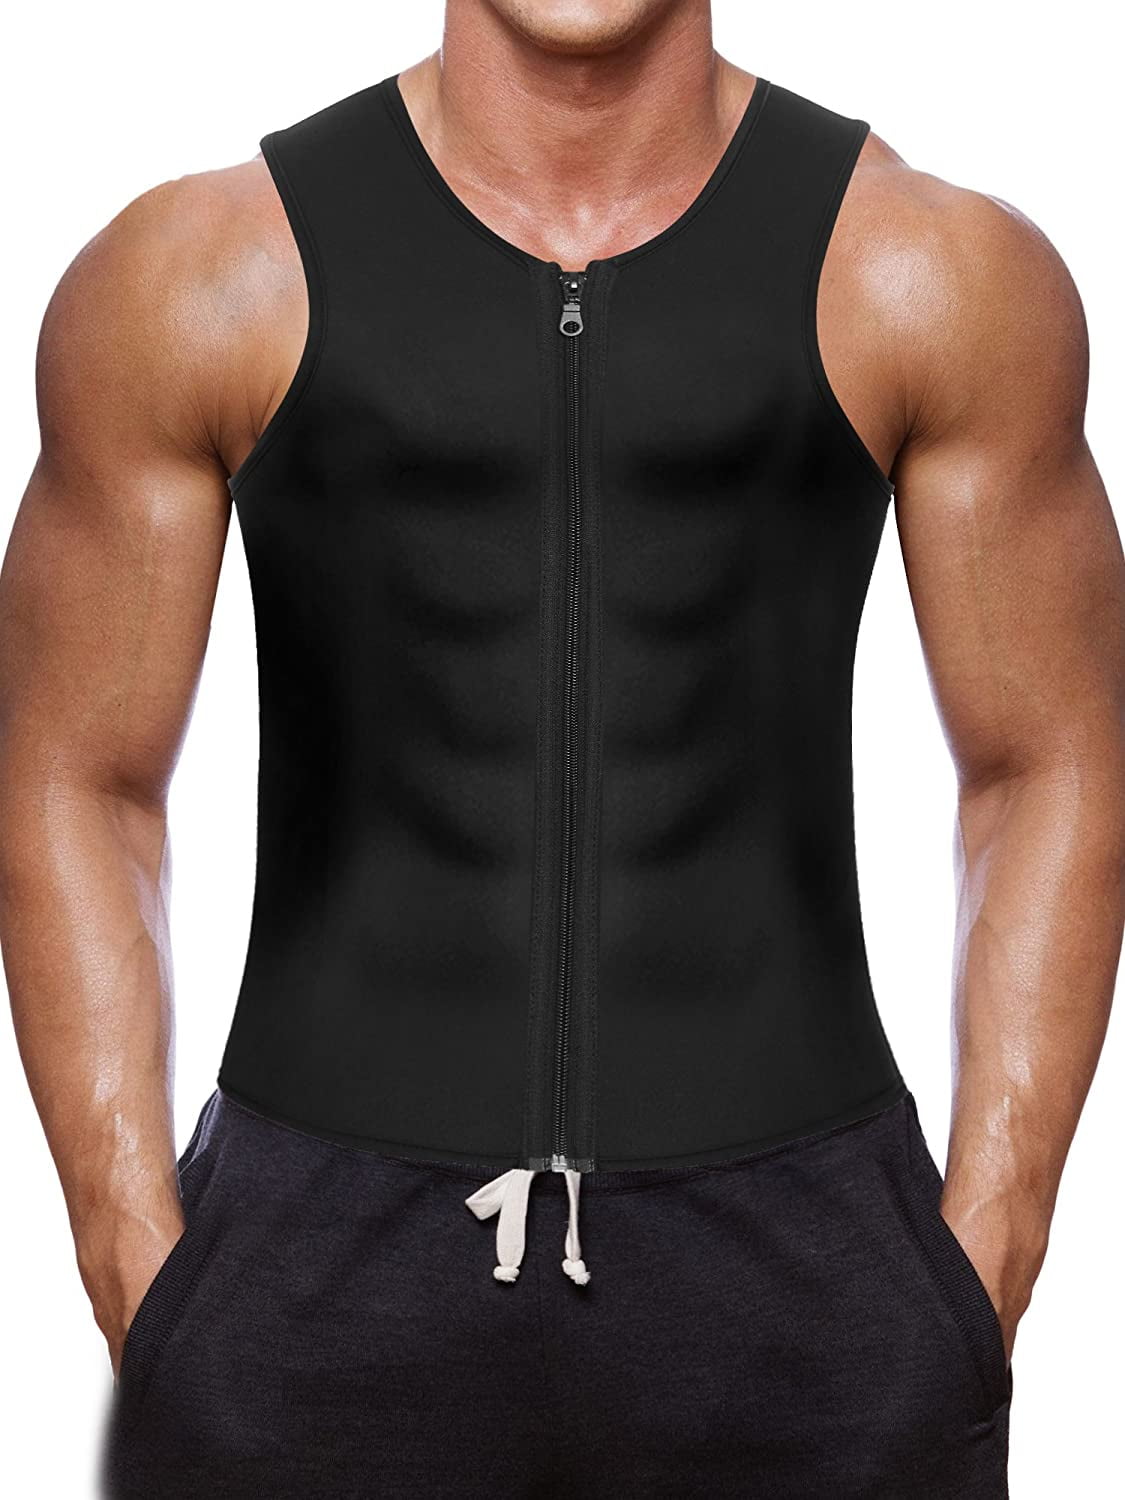 Men Sauna Suit Sweat Vest Waist Trainers Body Shaper Tank Top Compression Shirts